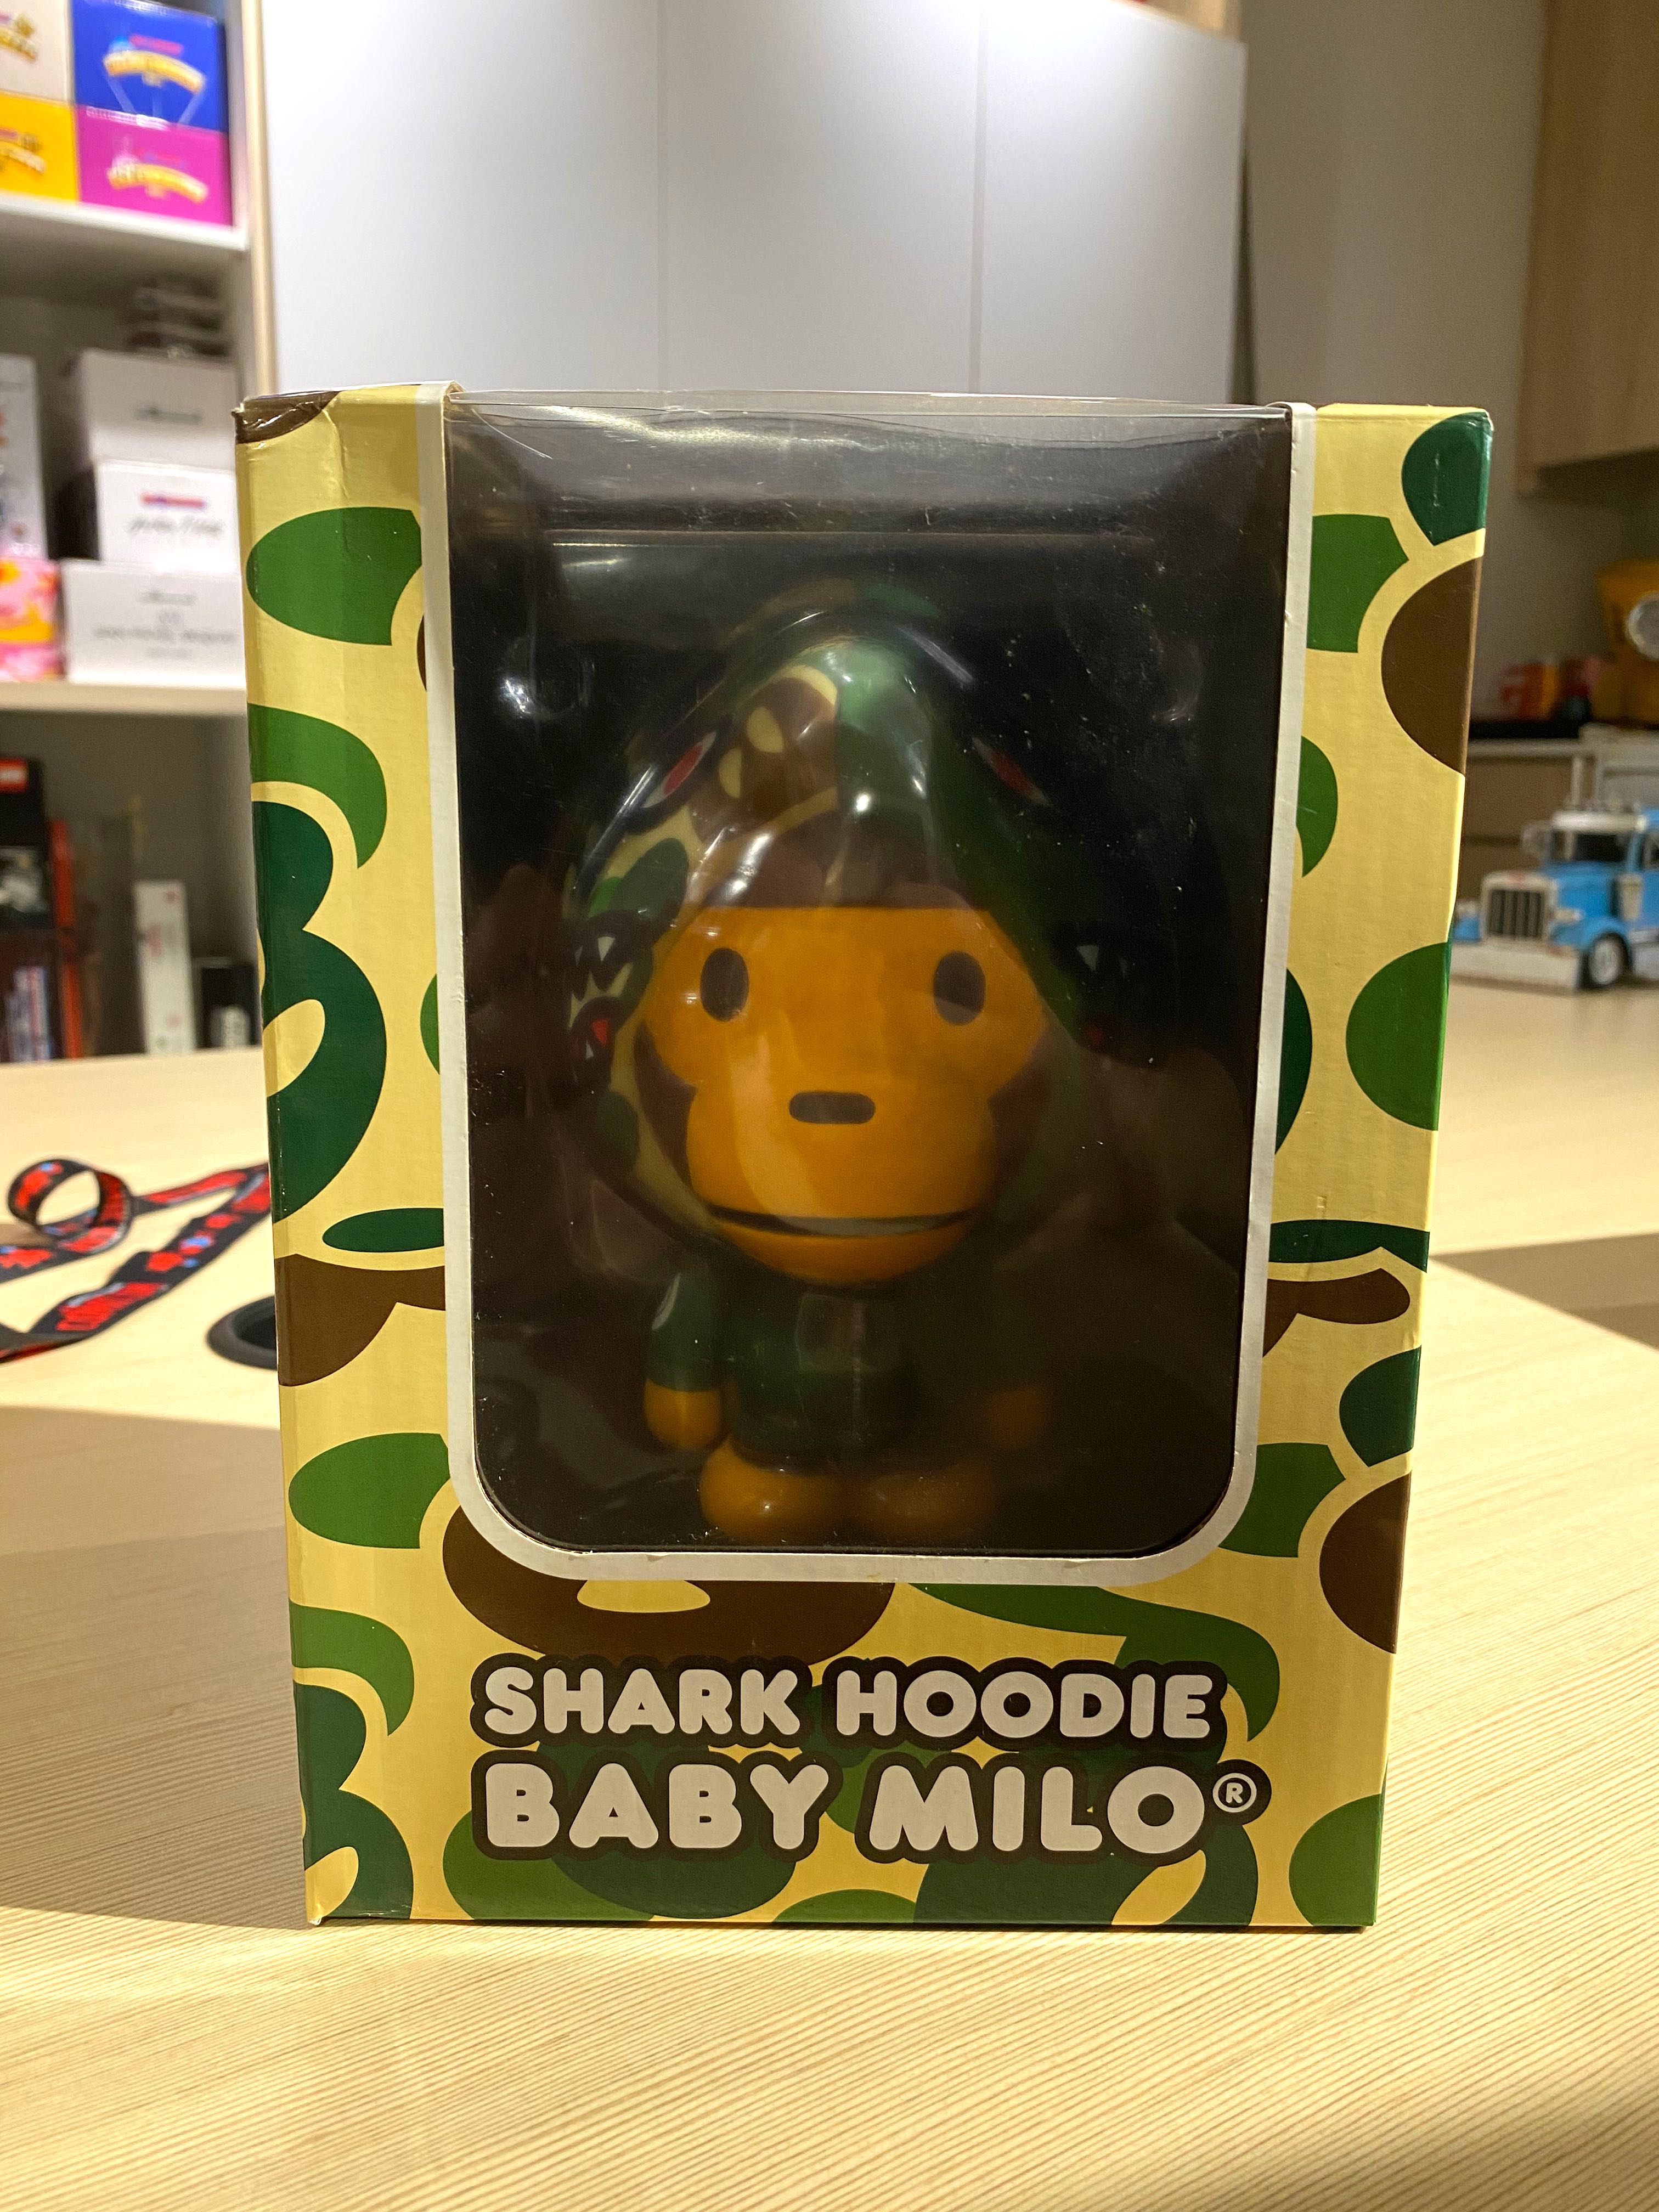 Medicom Toy VCD Baby Milo Shark Hoodie Green Figure